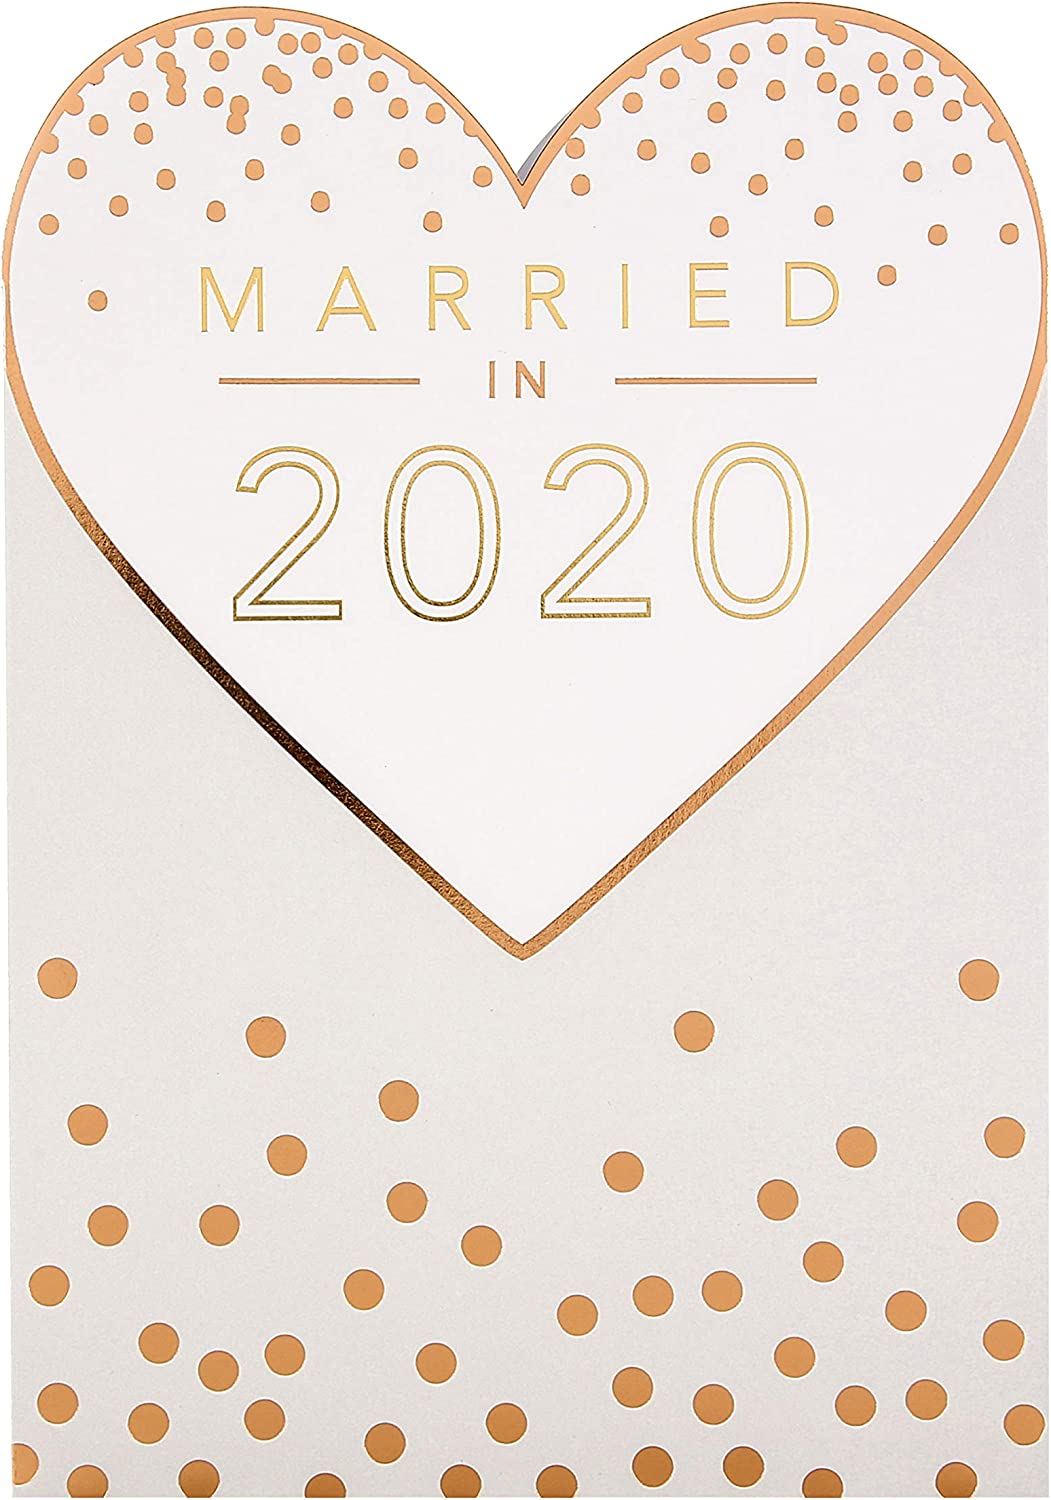 Hallmark ''Married in 2020'' Heart Style Card RRP 2.50 CLEARANCE XL 2